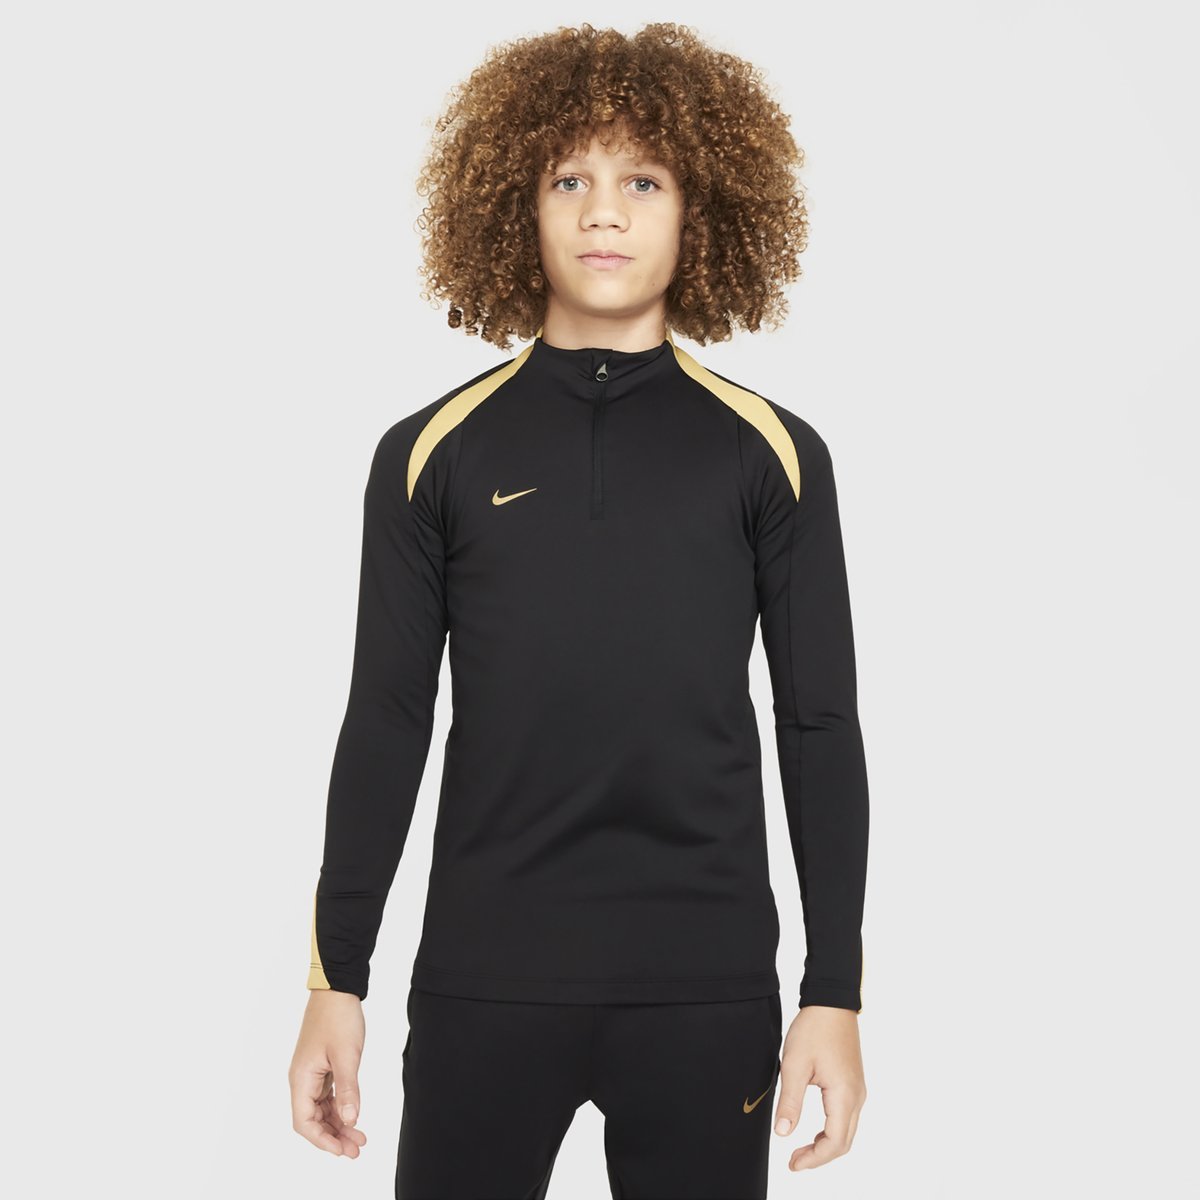 Nike Academy Football Clothing - Lovell Soccer